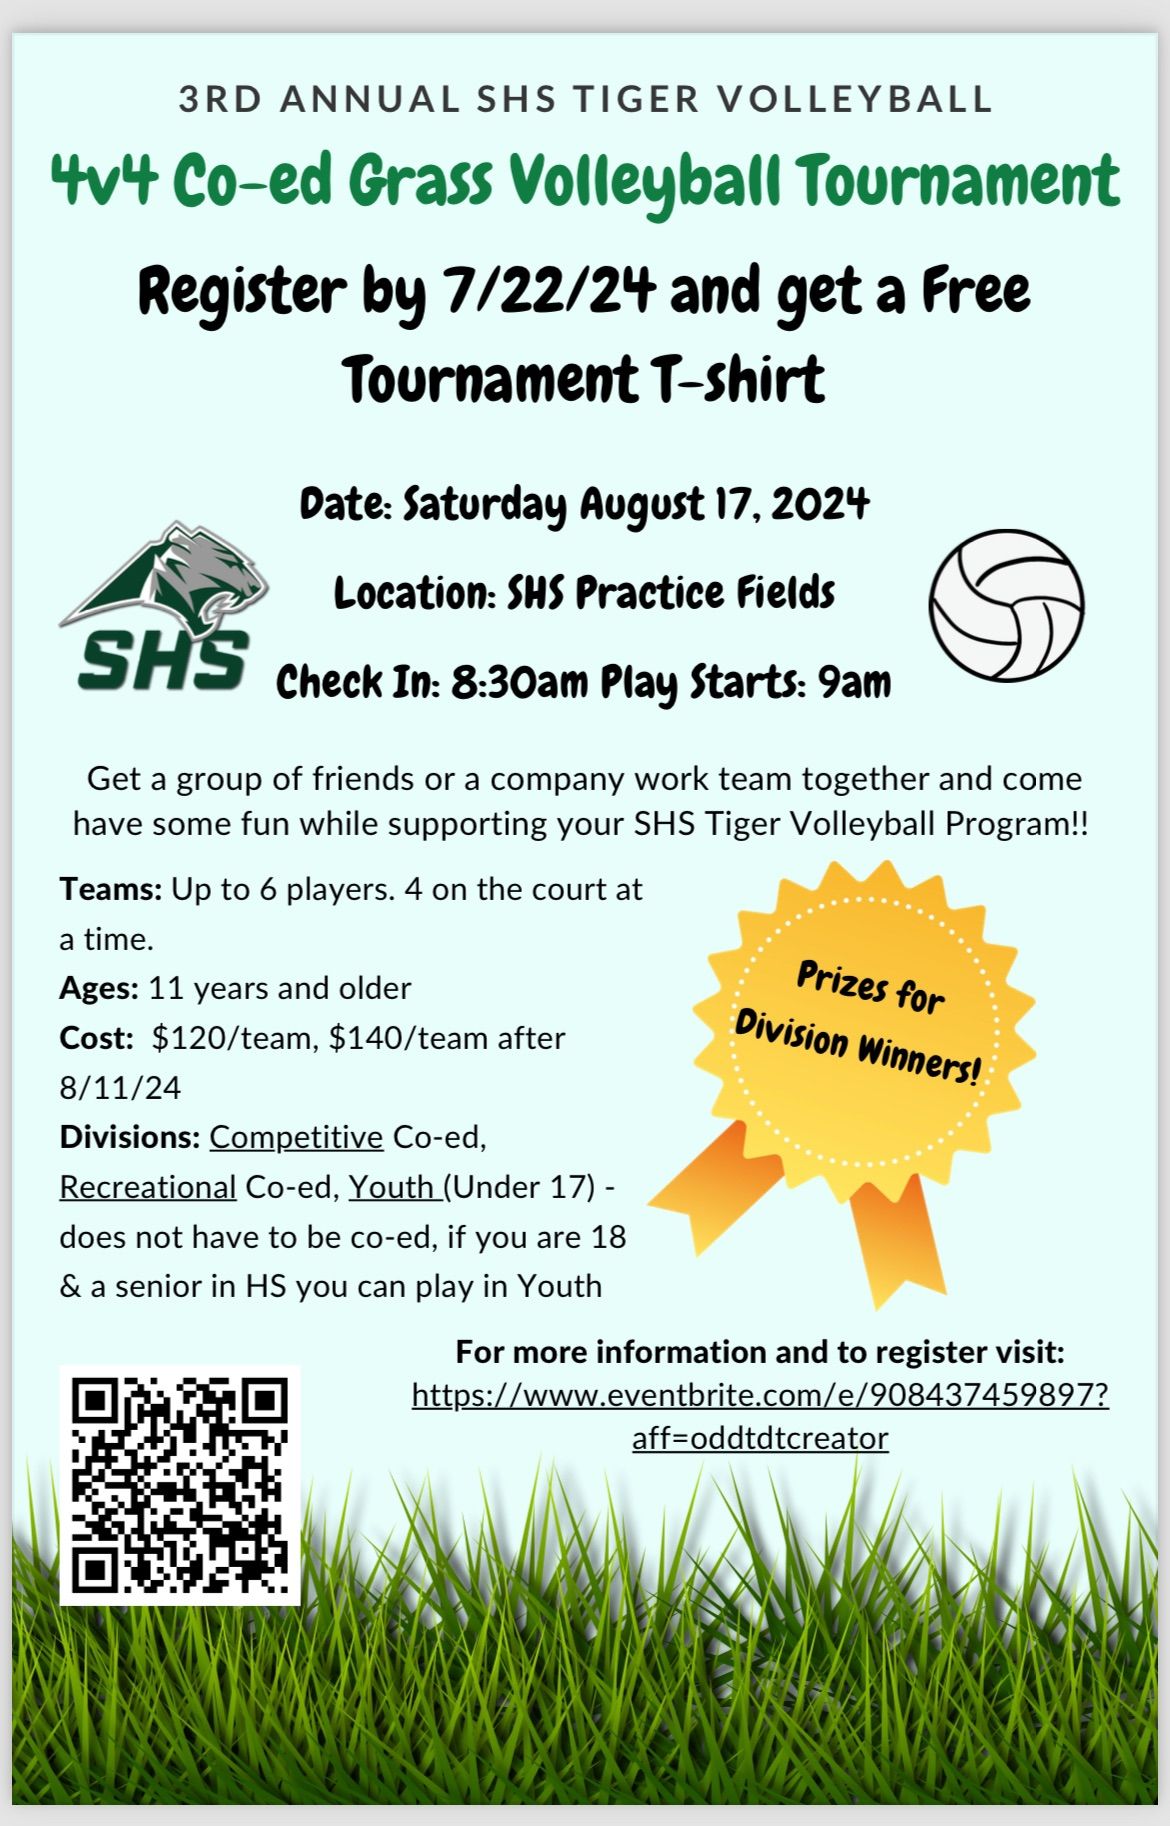 3rd Annual SHS Grass Volleyball Tournament